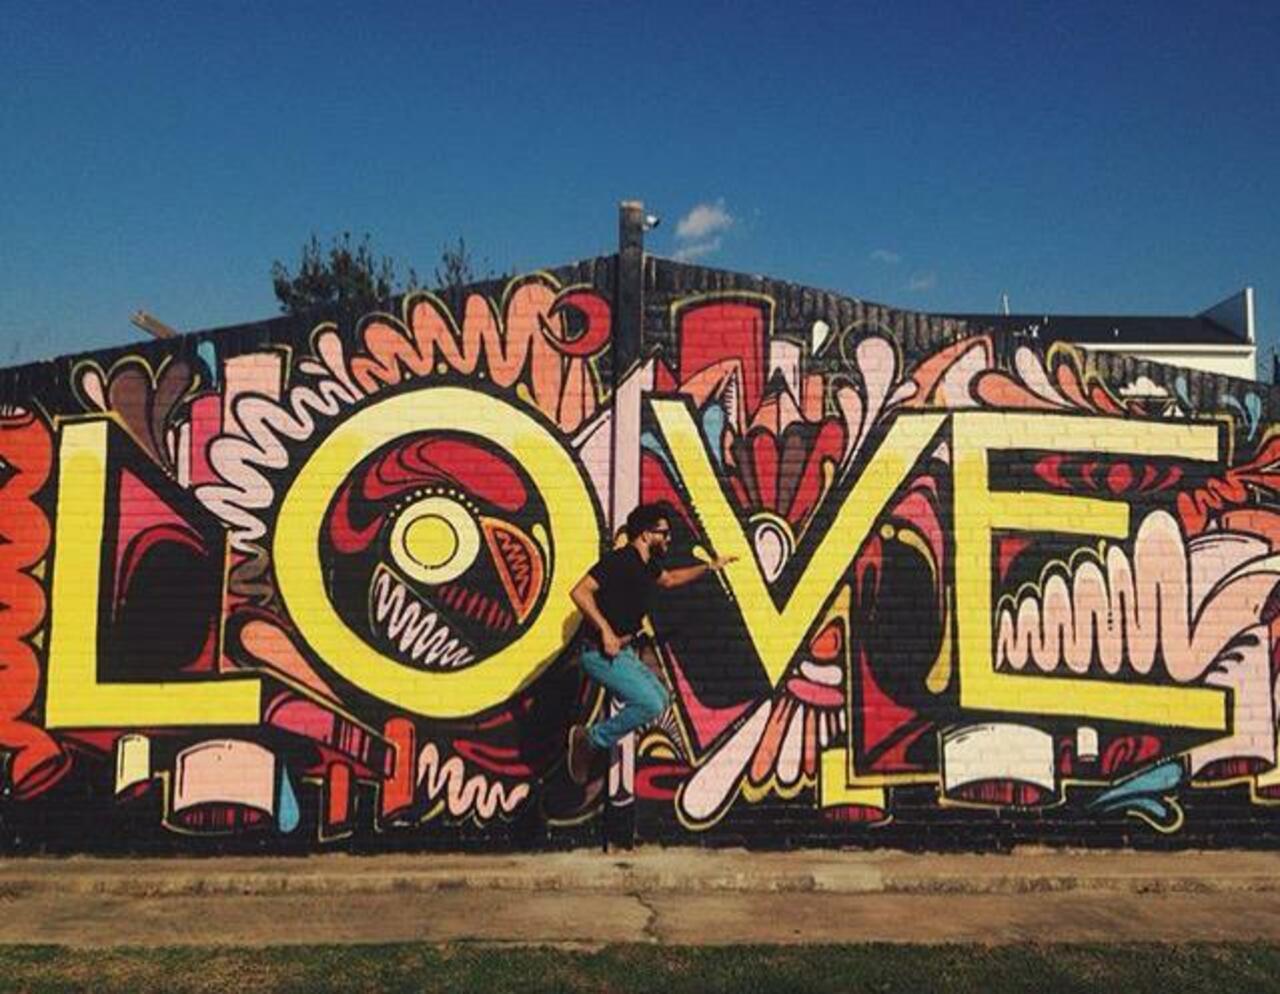 Love ❤️
Street Art by WileyArt

#art #graffiti #mural #streetart http://t.co/ndeOC6Q2kn